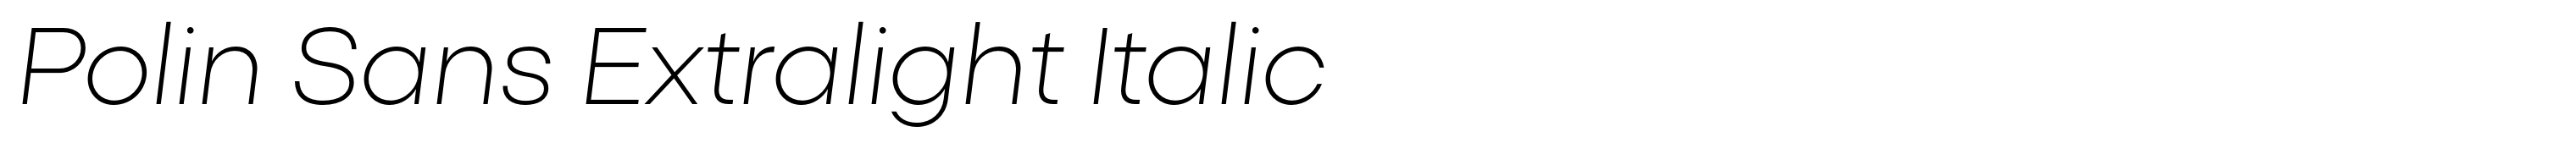 Polin Sans Extralight Italic